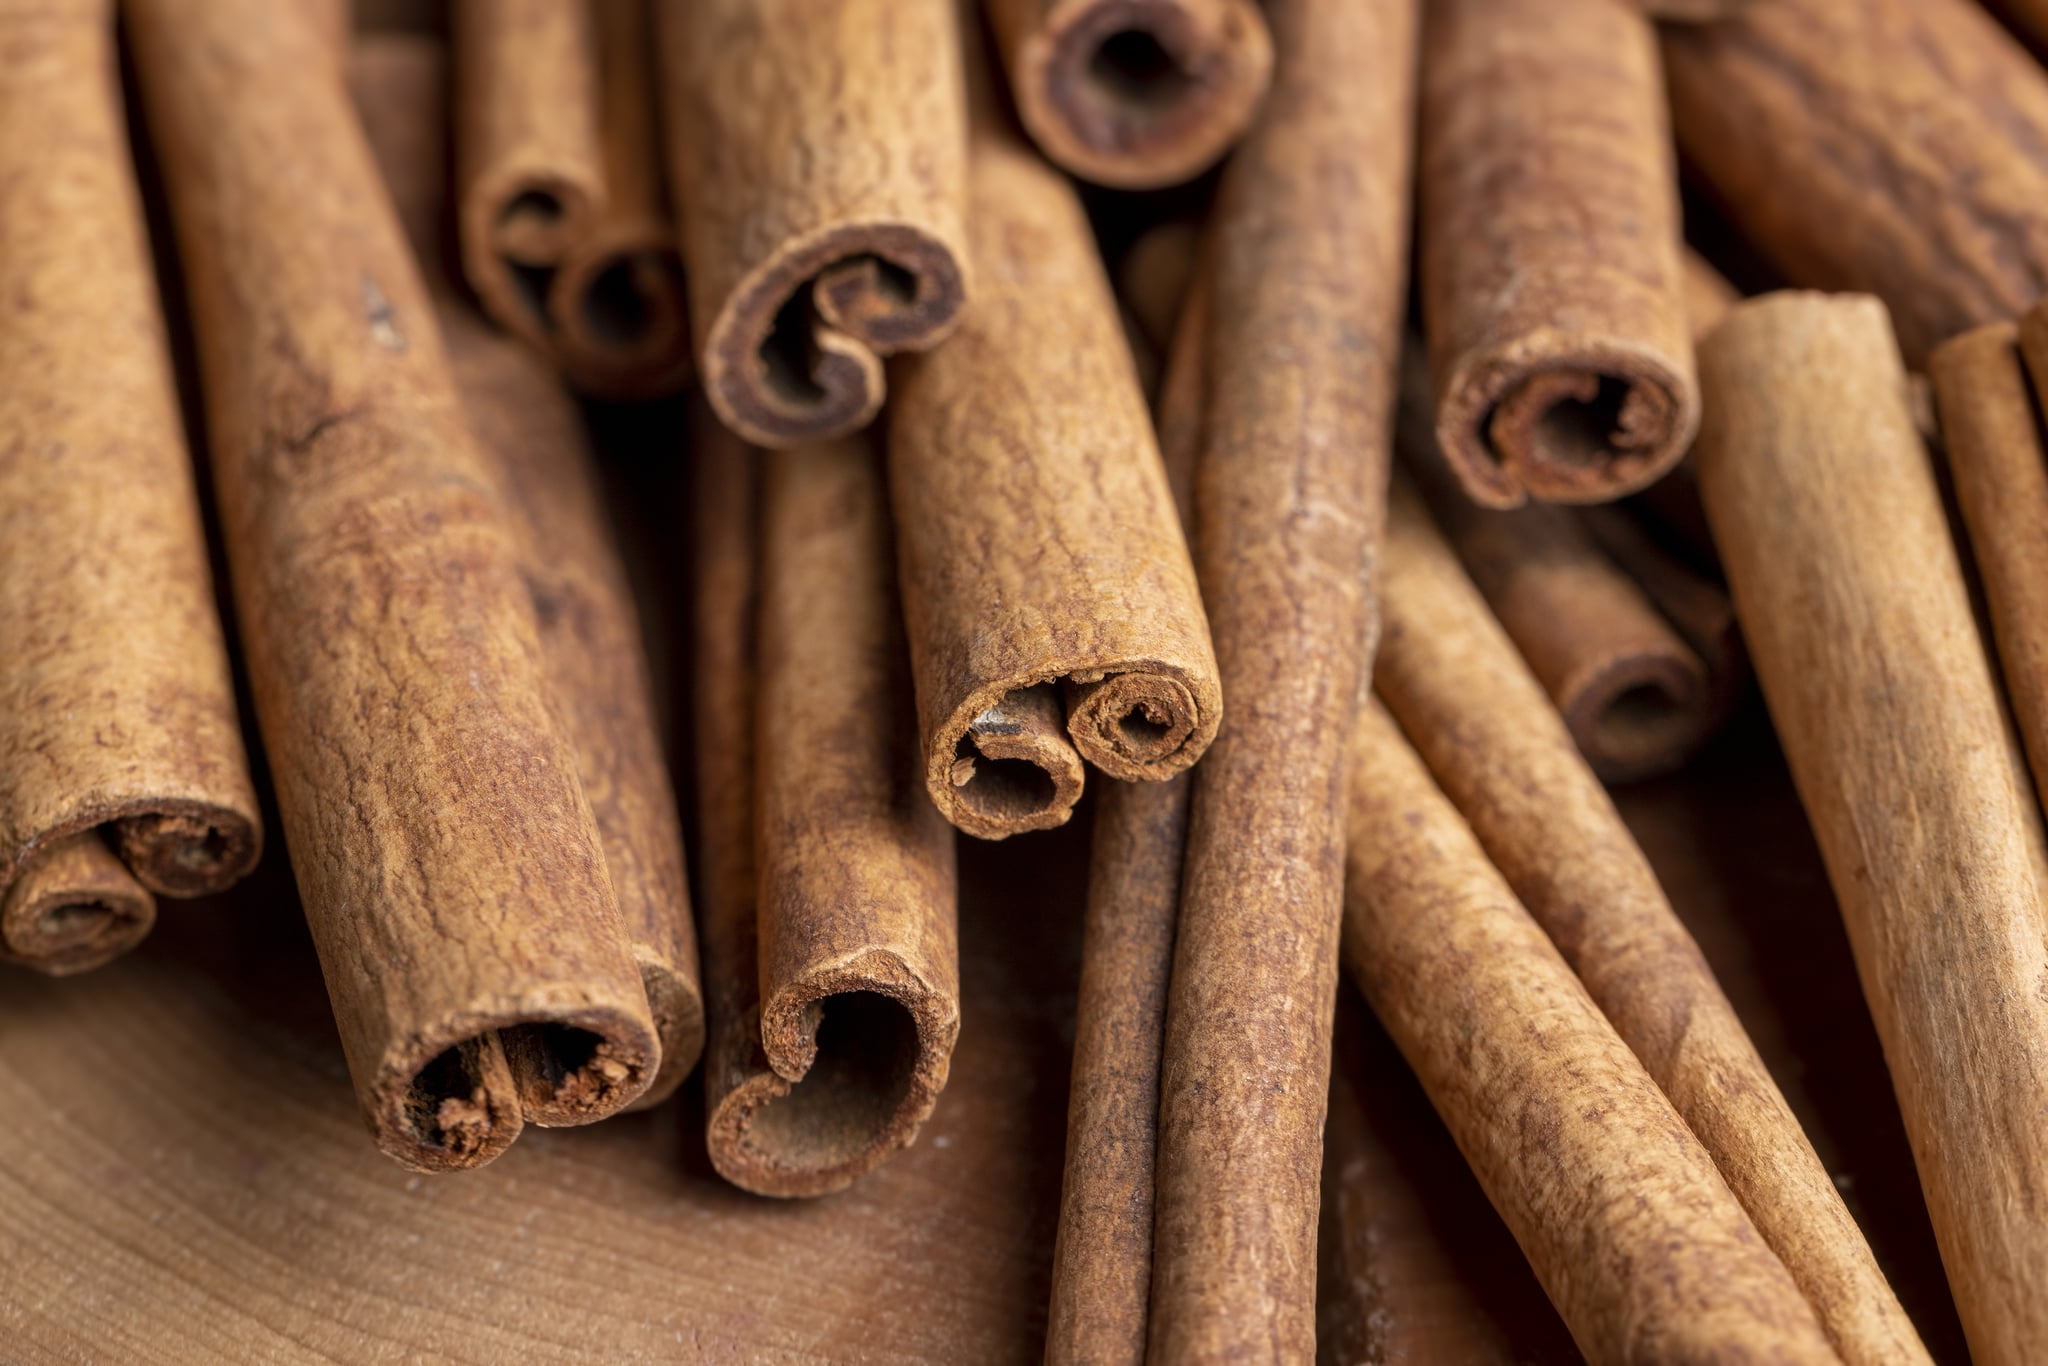 Ceylon cinnamon benefits